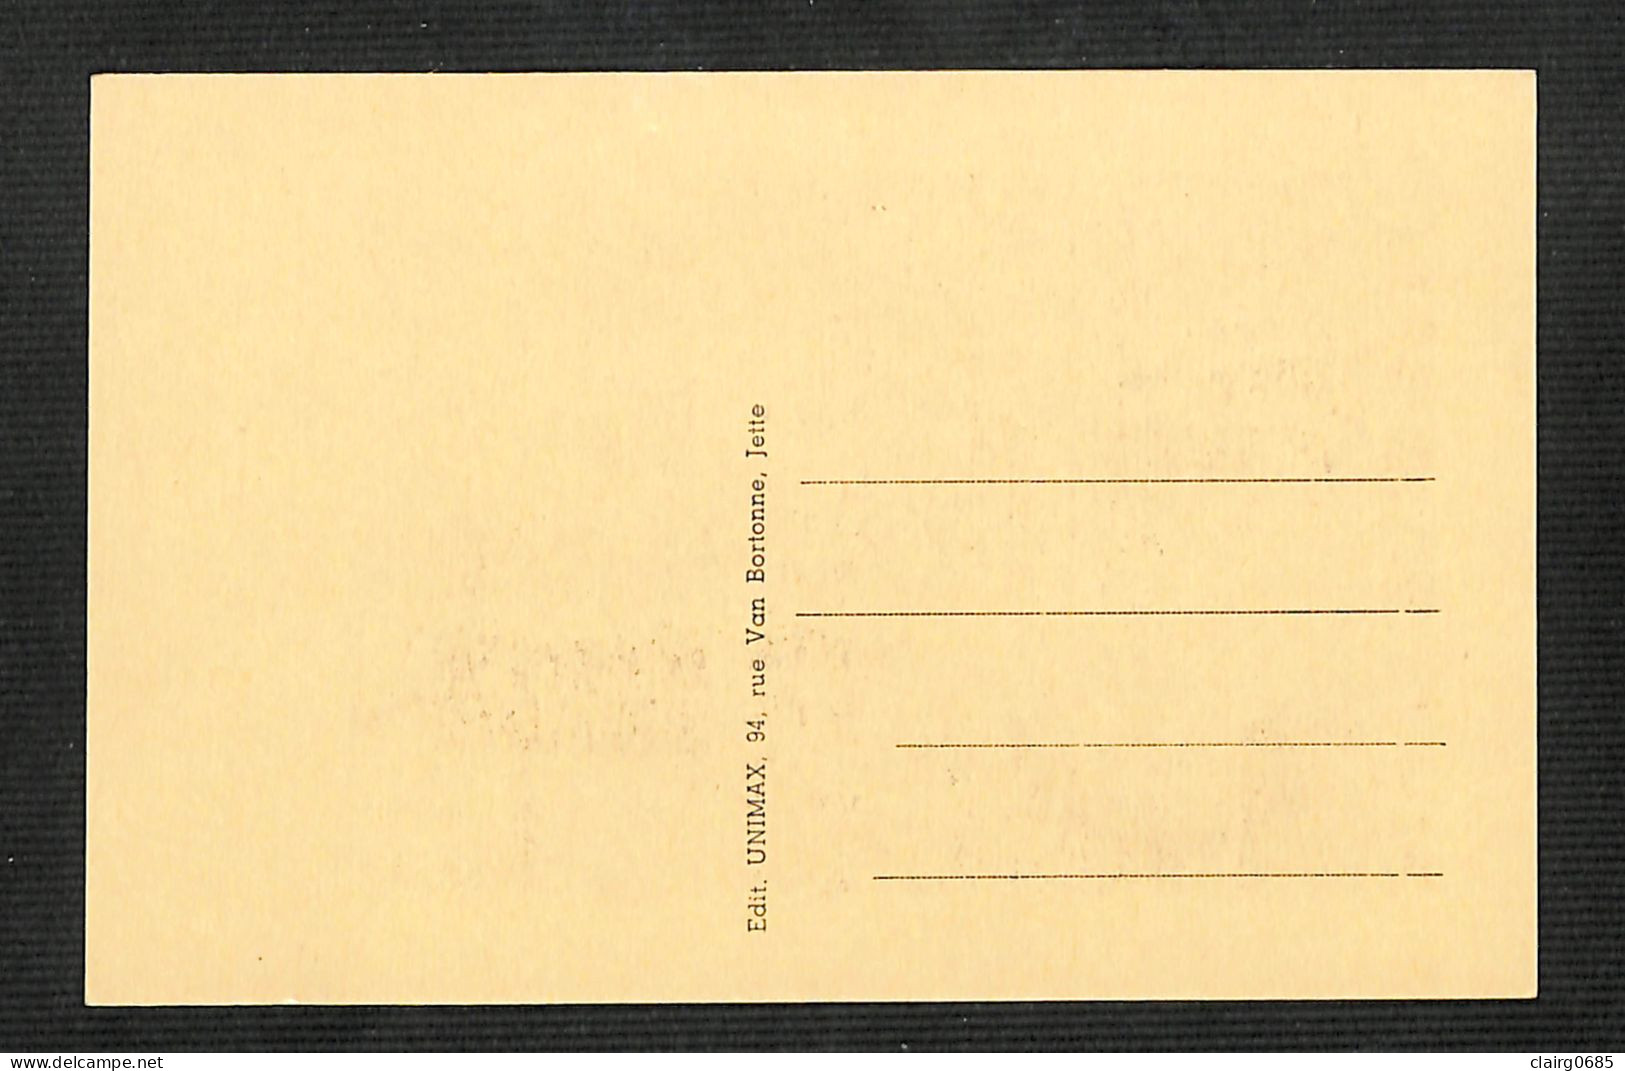 LUXEMBOURG - Carte MAXIMUM 1956 - Ignace De La Fontaine - Maximum Cards